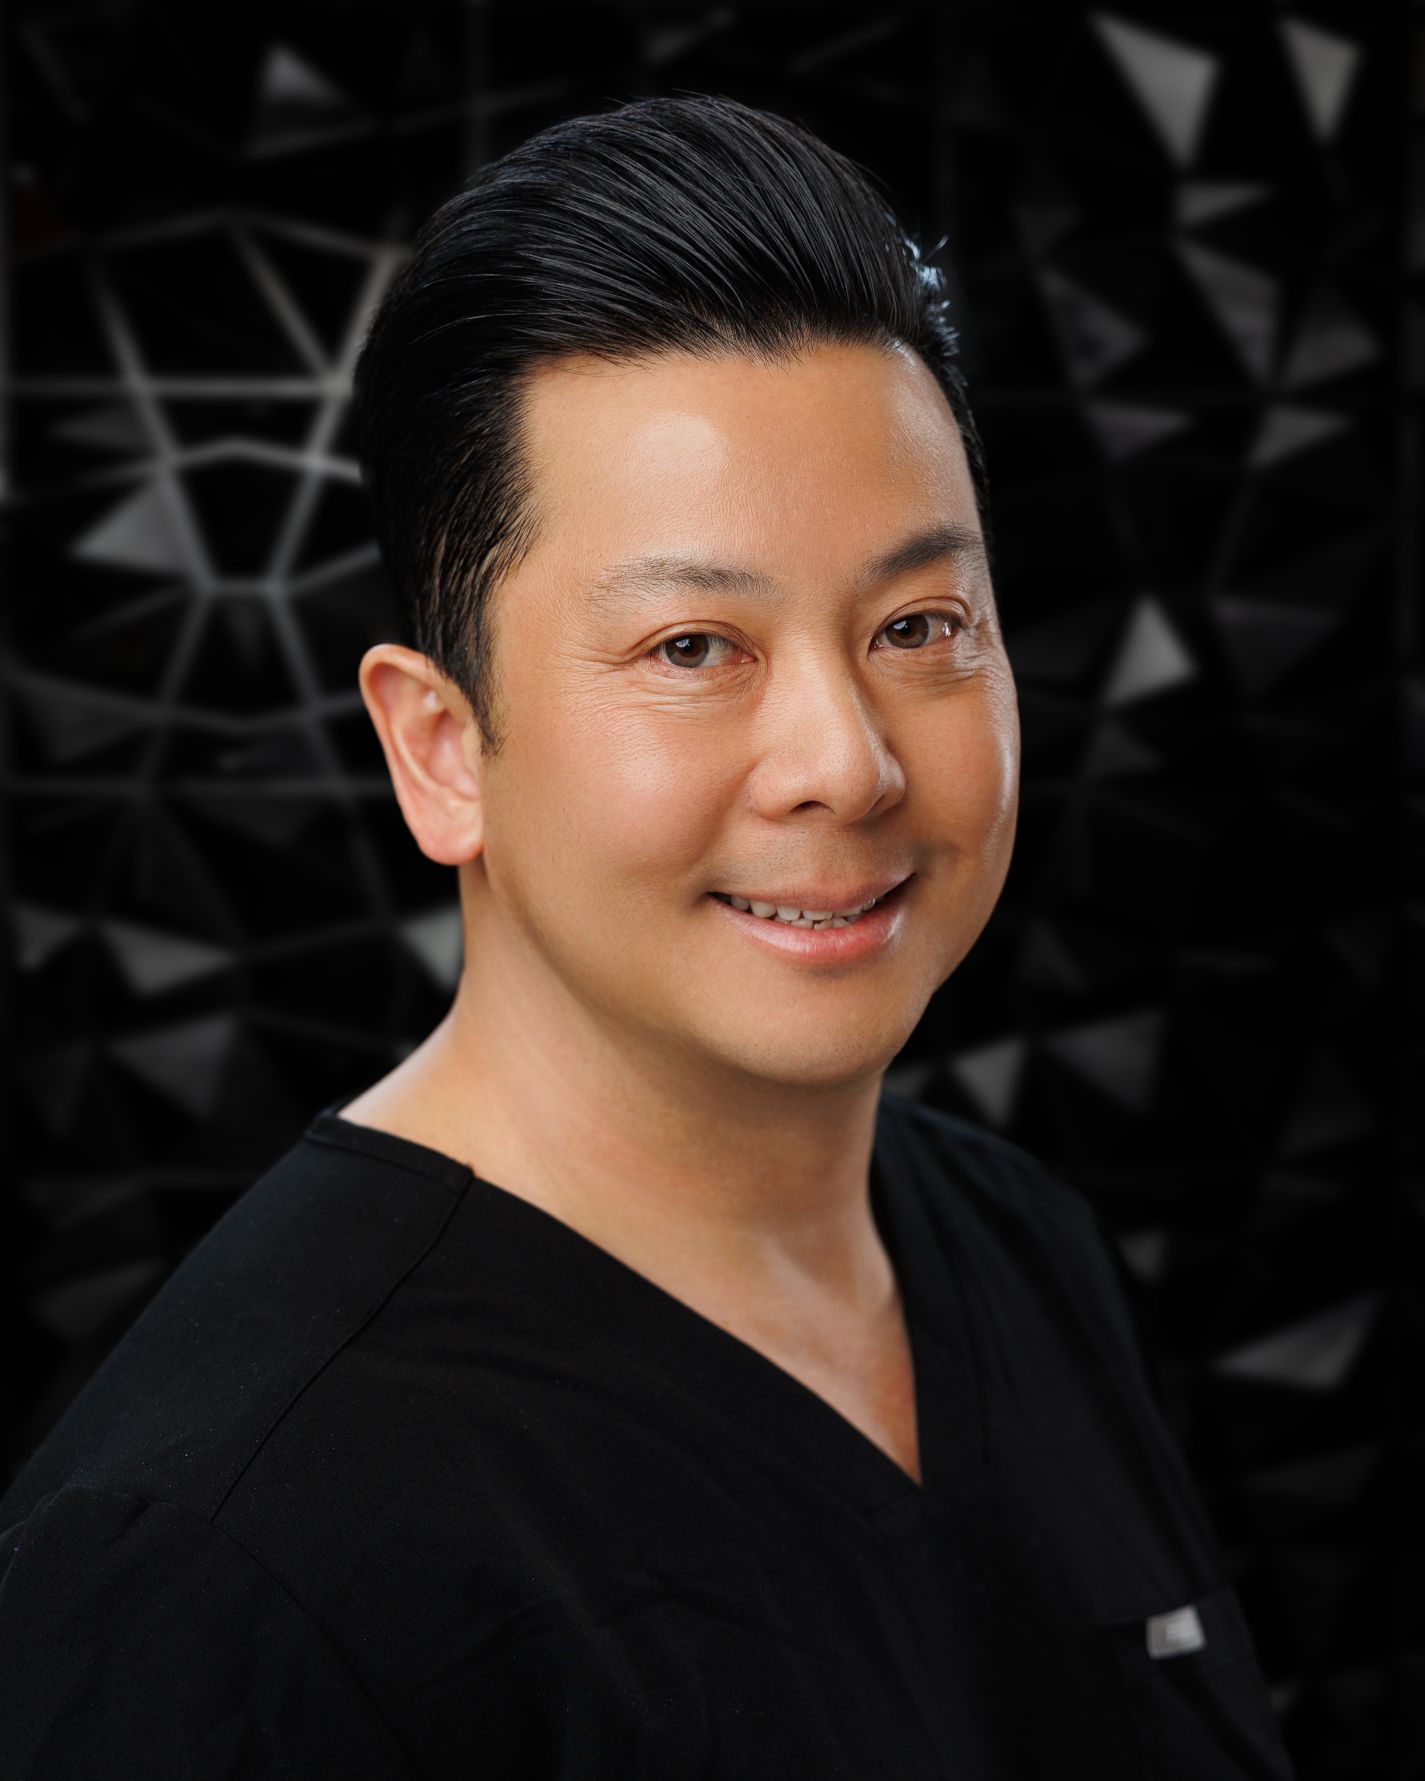 Dr Michael Chen | APEX Performance & Aesthetics in Sandy, UT